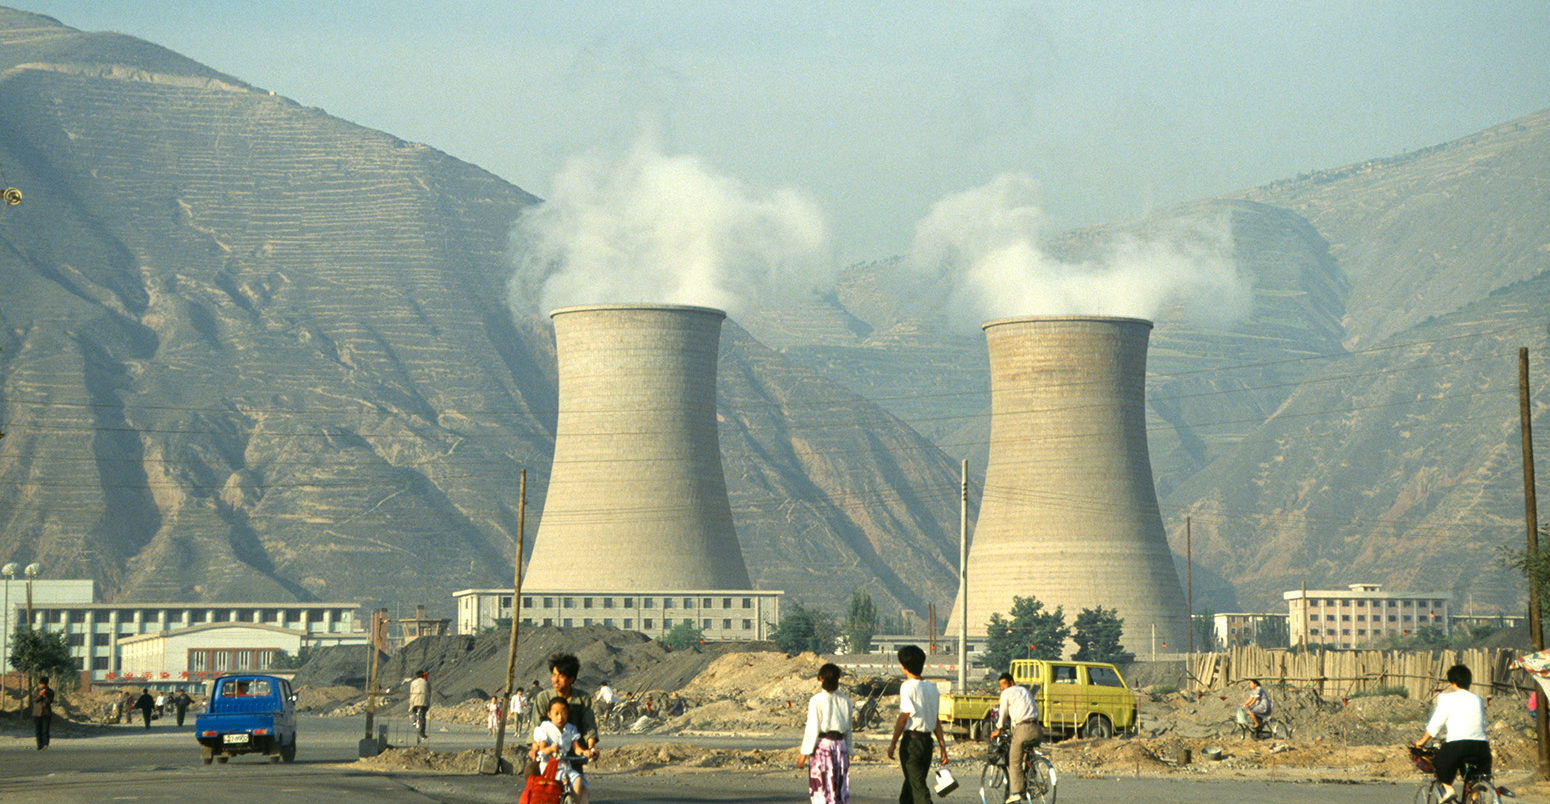 A coal-fired power station in Lanzhou, Gansu Province, China. Credit: Eye Ubiquitous / Alamy Stock Photo. AM0WMF